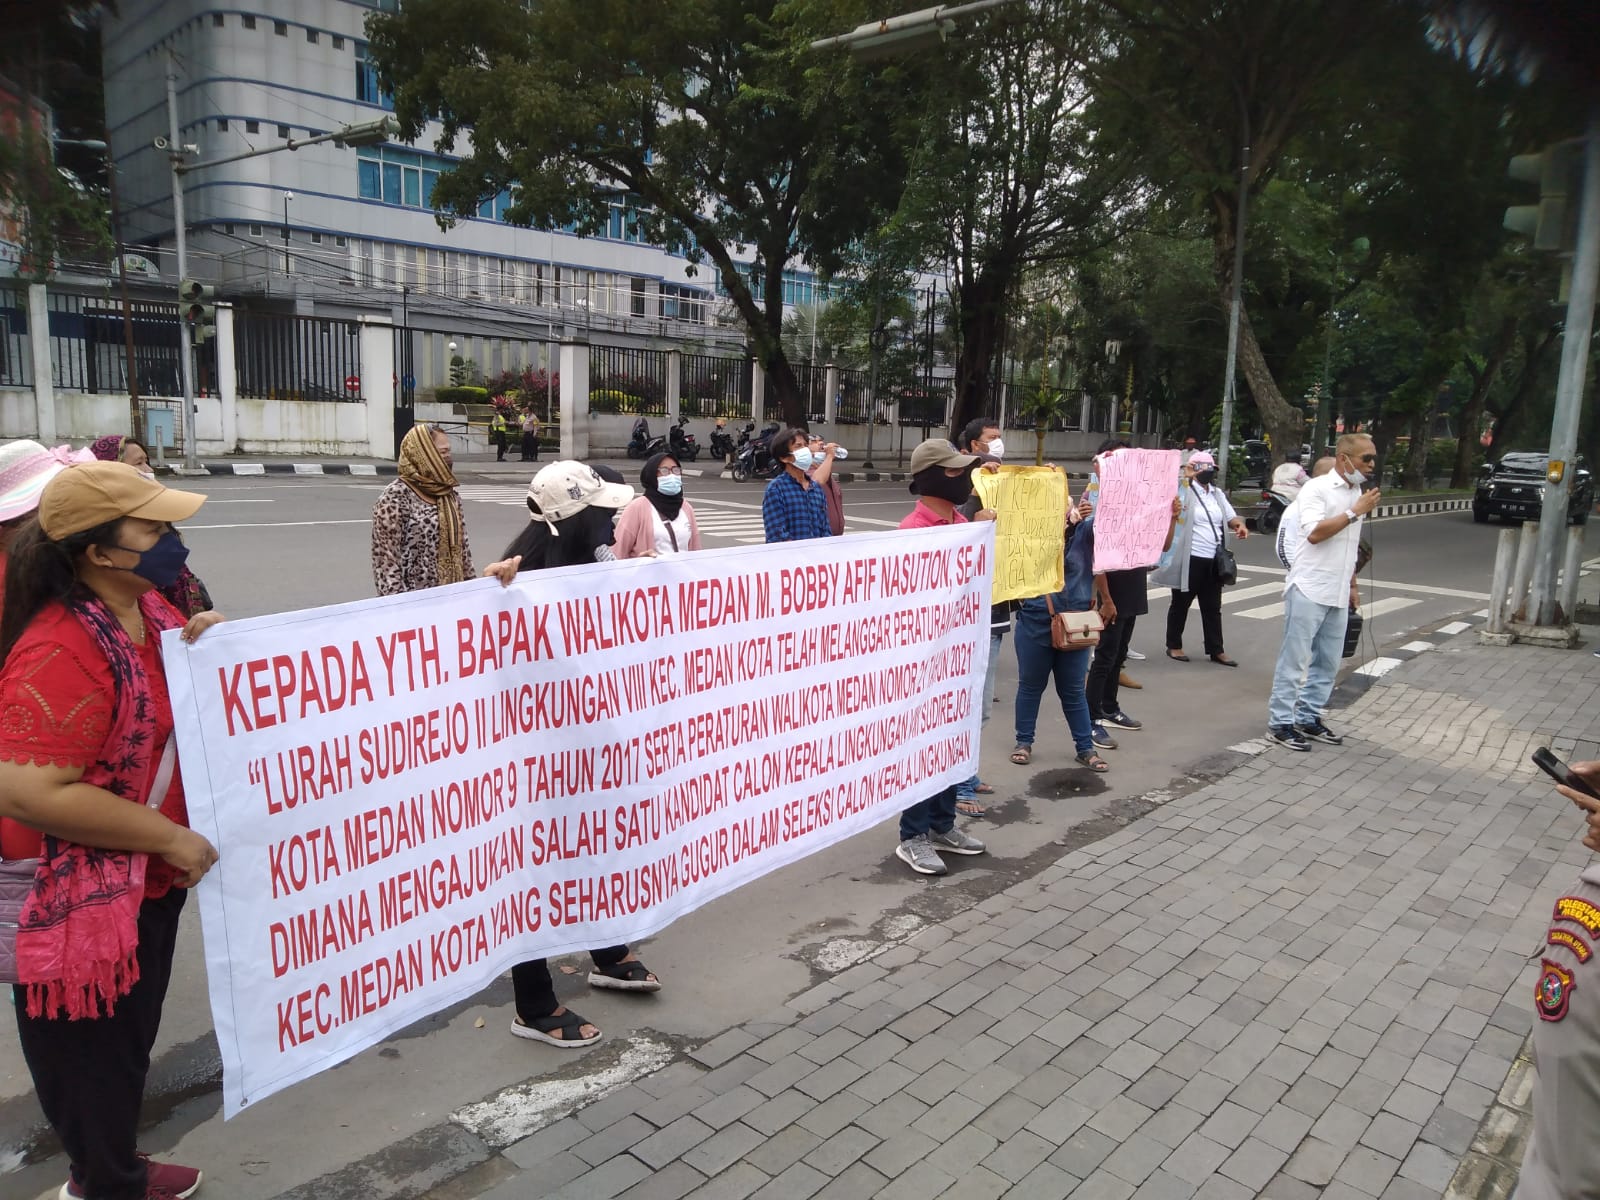 Gelar Demo, Warga Sudirejo 2 Desak Walikota Medan Copot Kepling Maralohot Hasibuan